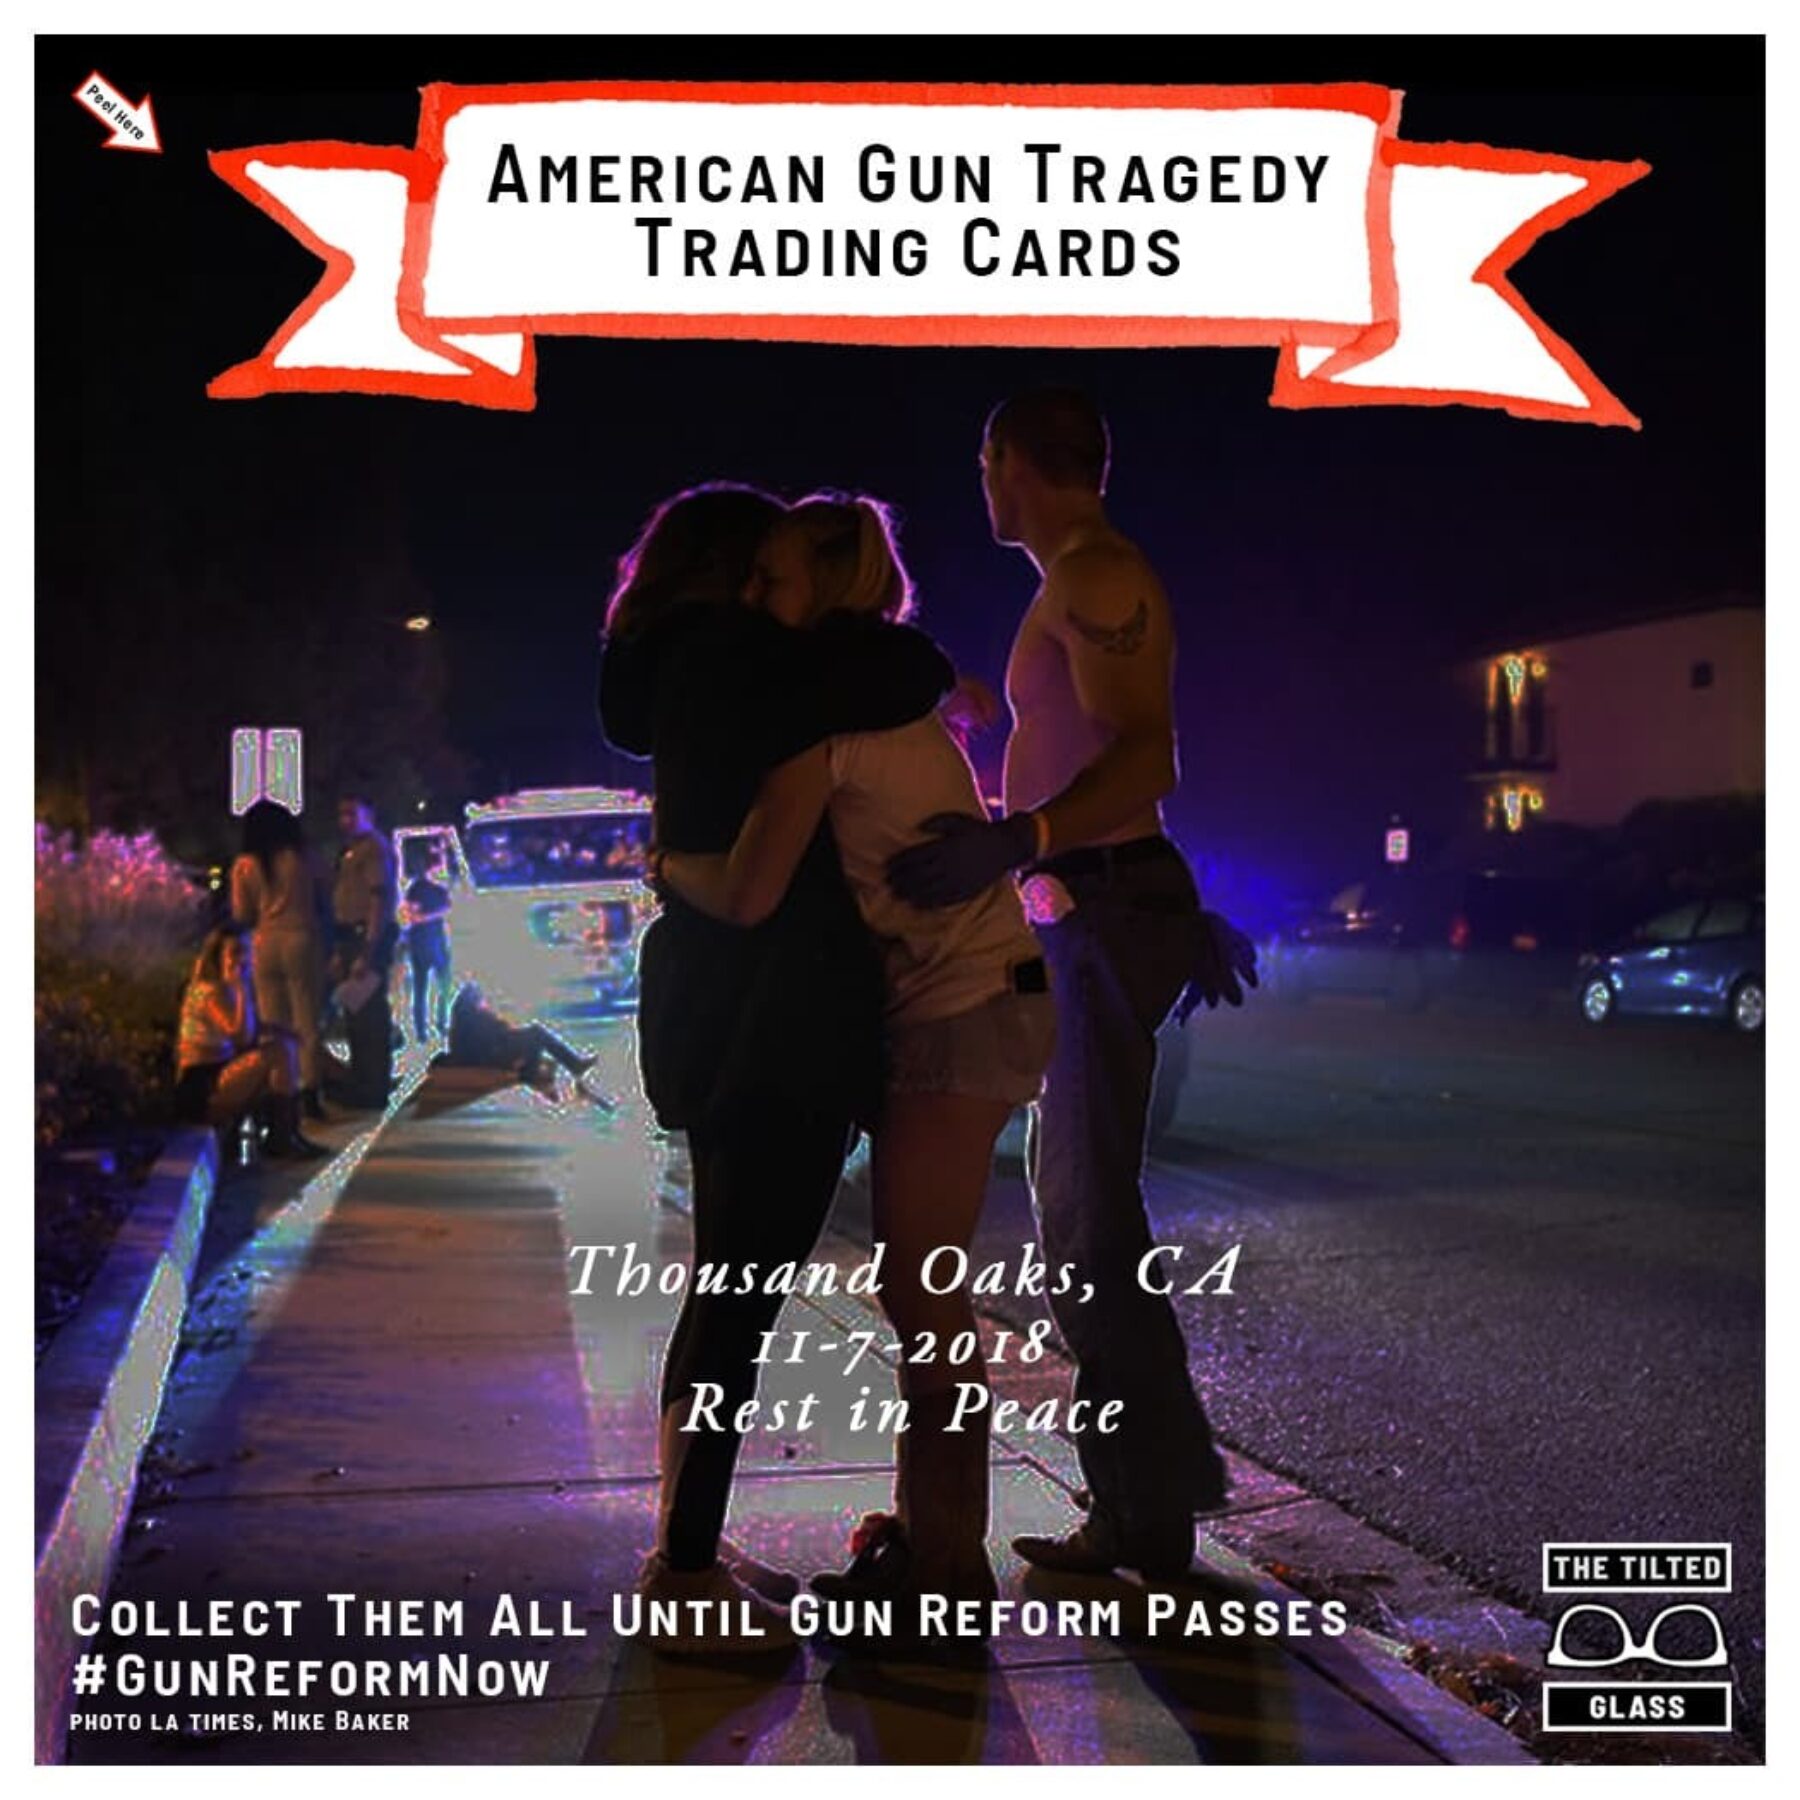 American Gun Tragedy Trading Cards - 11-7-2018 - Thousand Oaks, CA